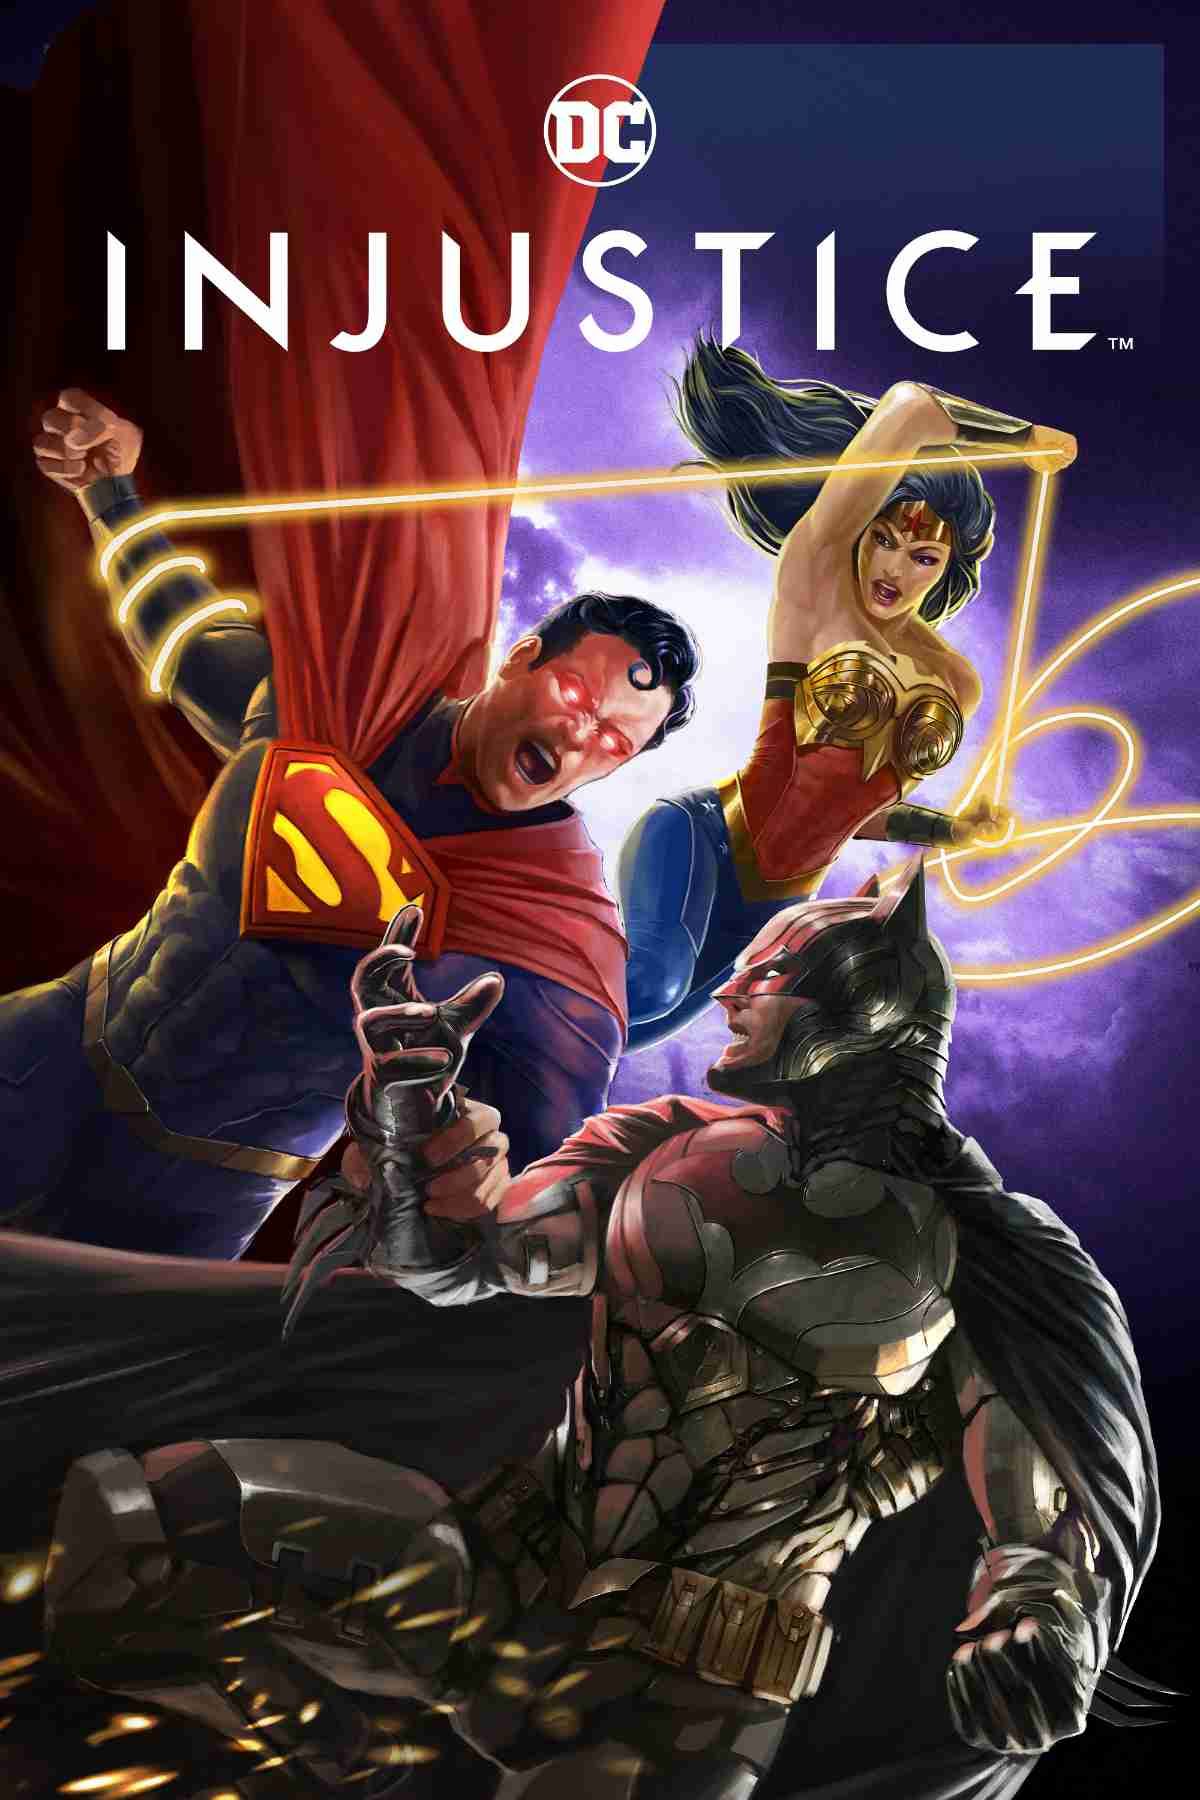 InjusticeDC